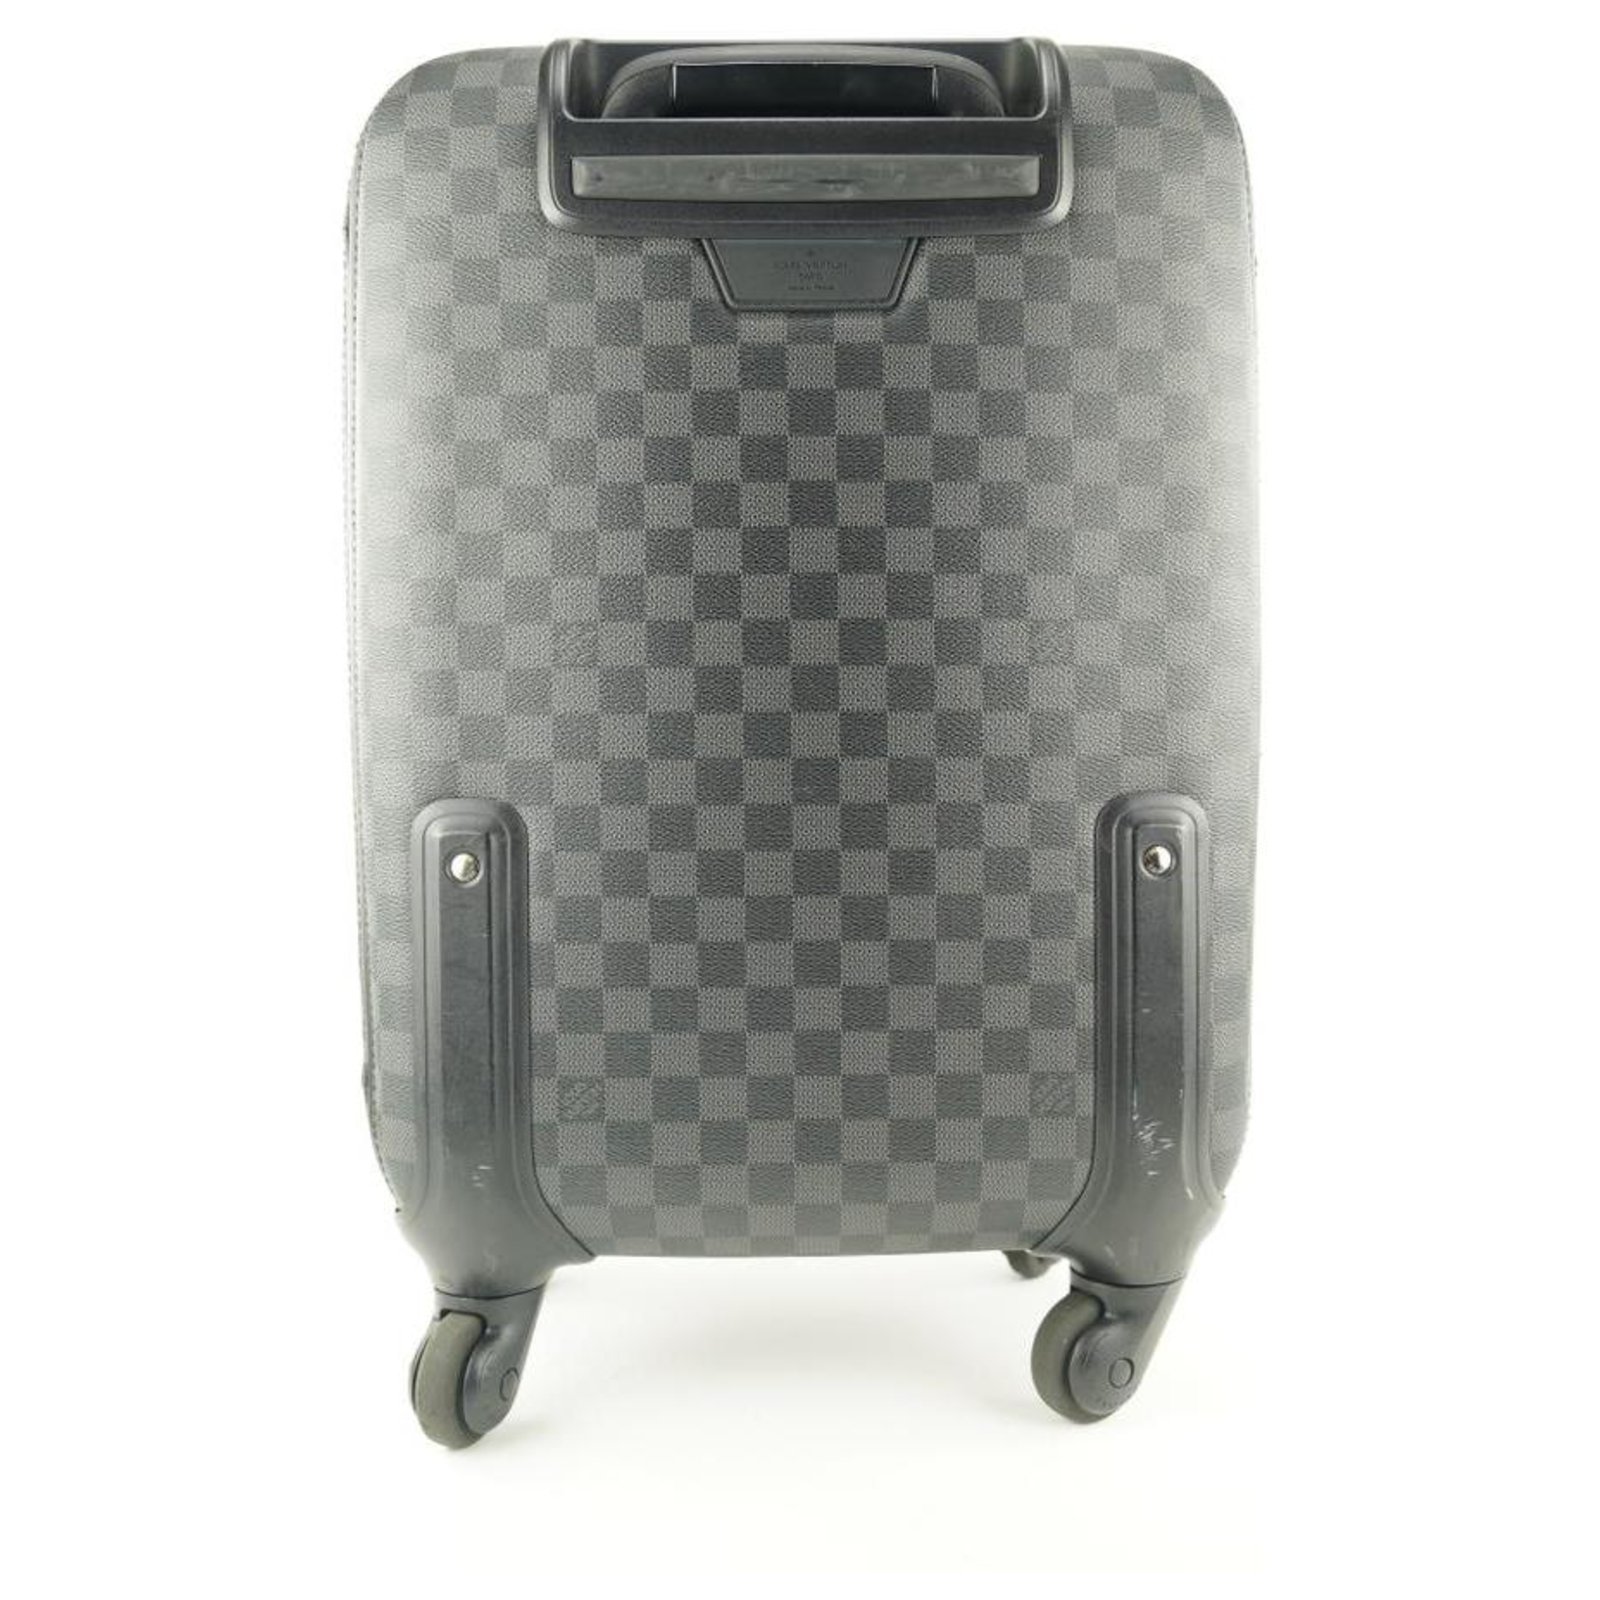 damier graphite luggage